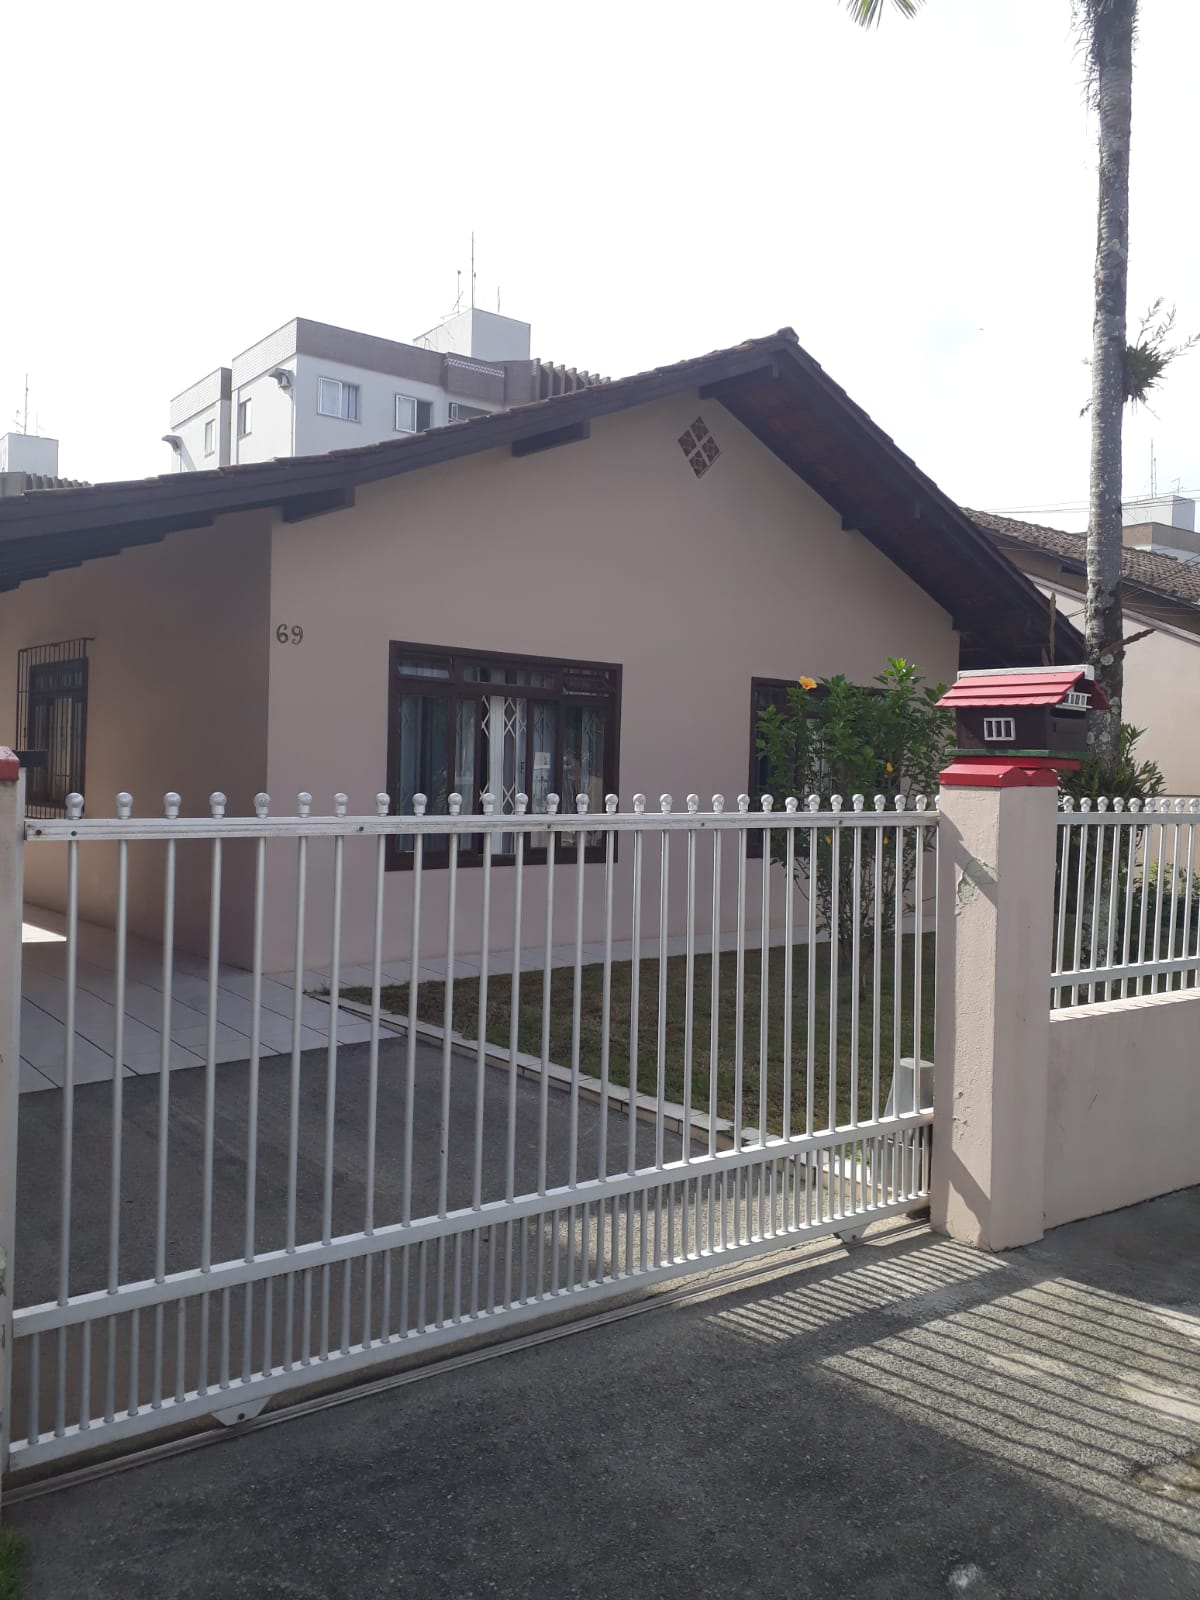 Casa Plana – Averbada – 5 dormitórios (1 suíte) – Escritório – Área de festas – Costa e Silva